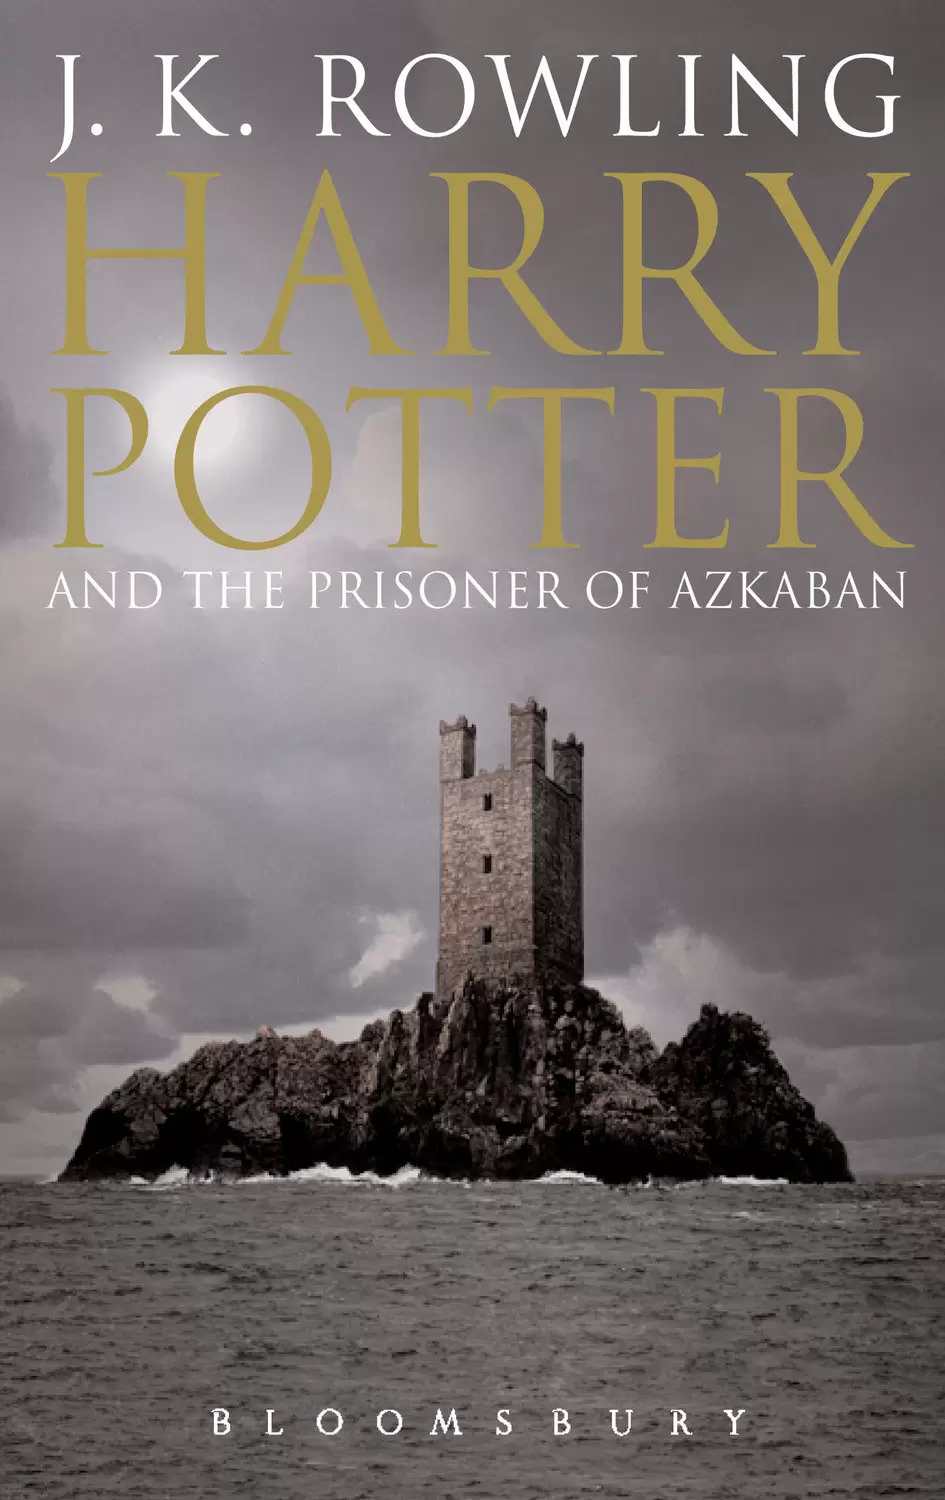 Livres Harry Potter et Animaux Fantastiques - Harry Potter and the Prisoner of Azkaban - Adult Edition